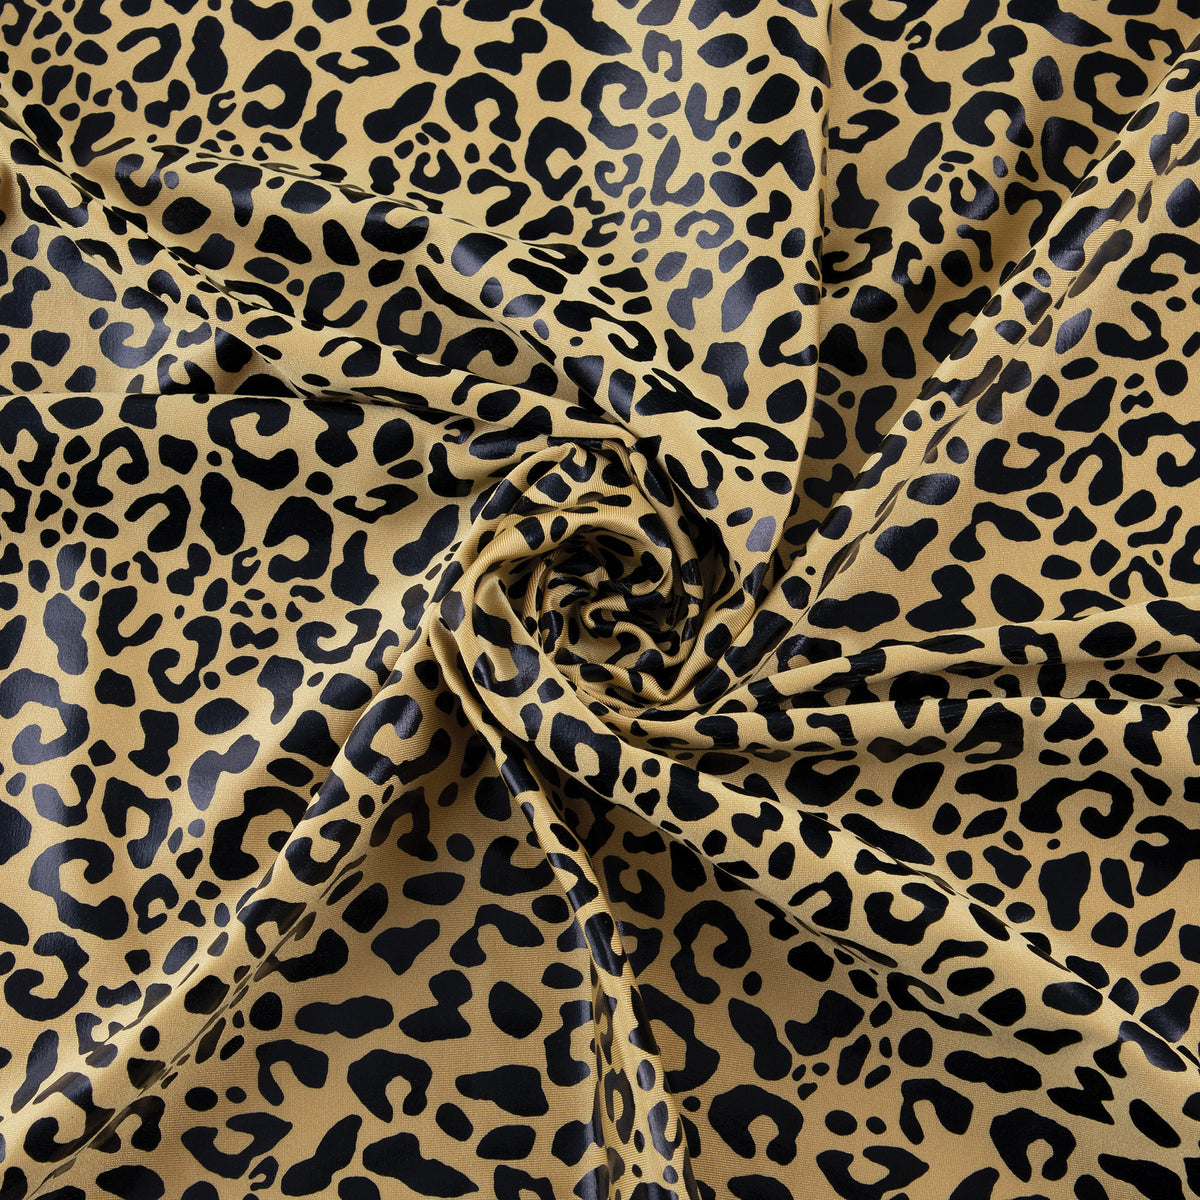 Stretch Fabric, Metallic Cheetah